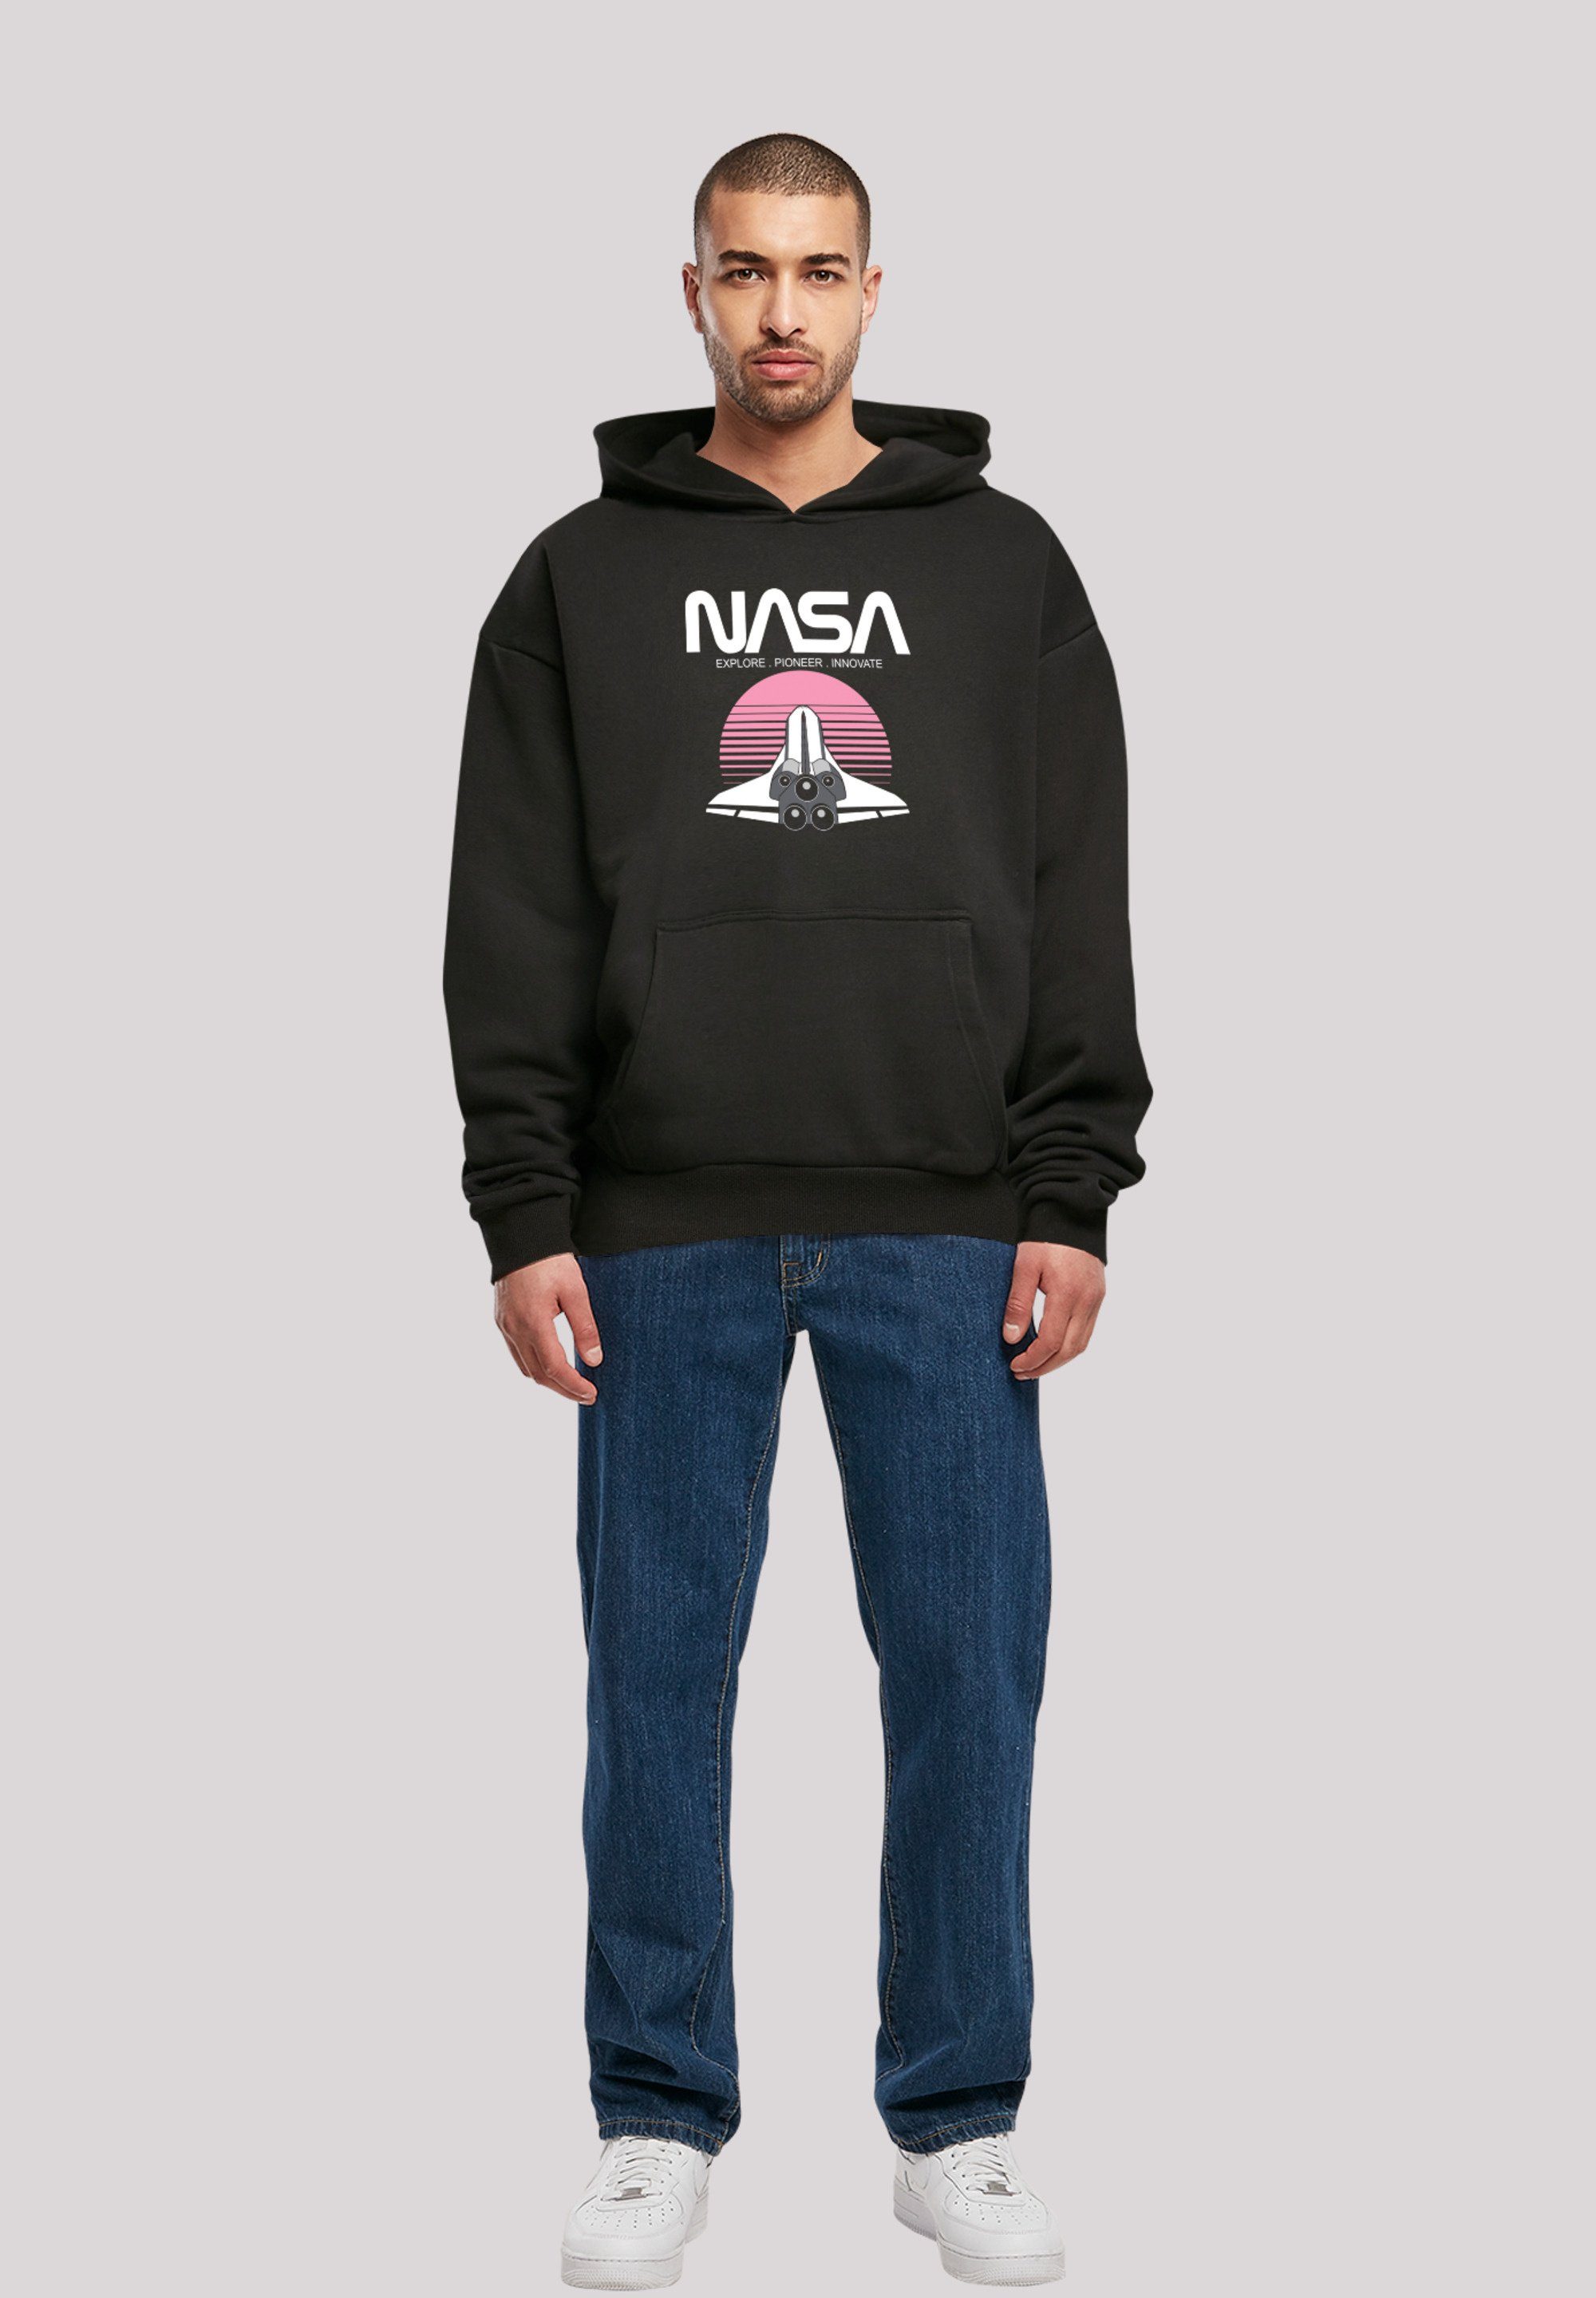 F4NT4STIC Sweatshirt Oversize Sunset Print Premium Shuttle NASA Space